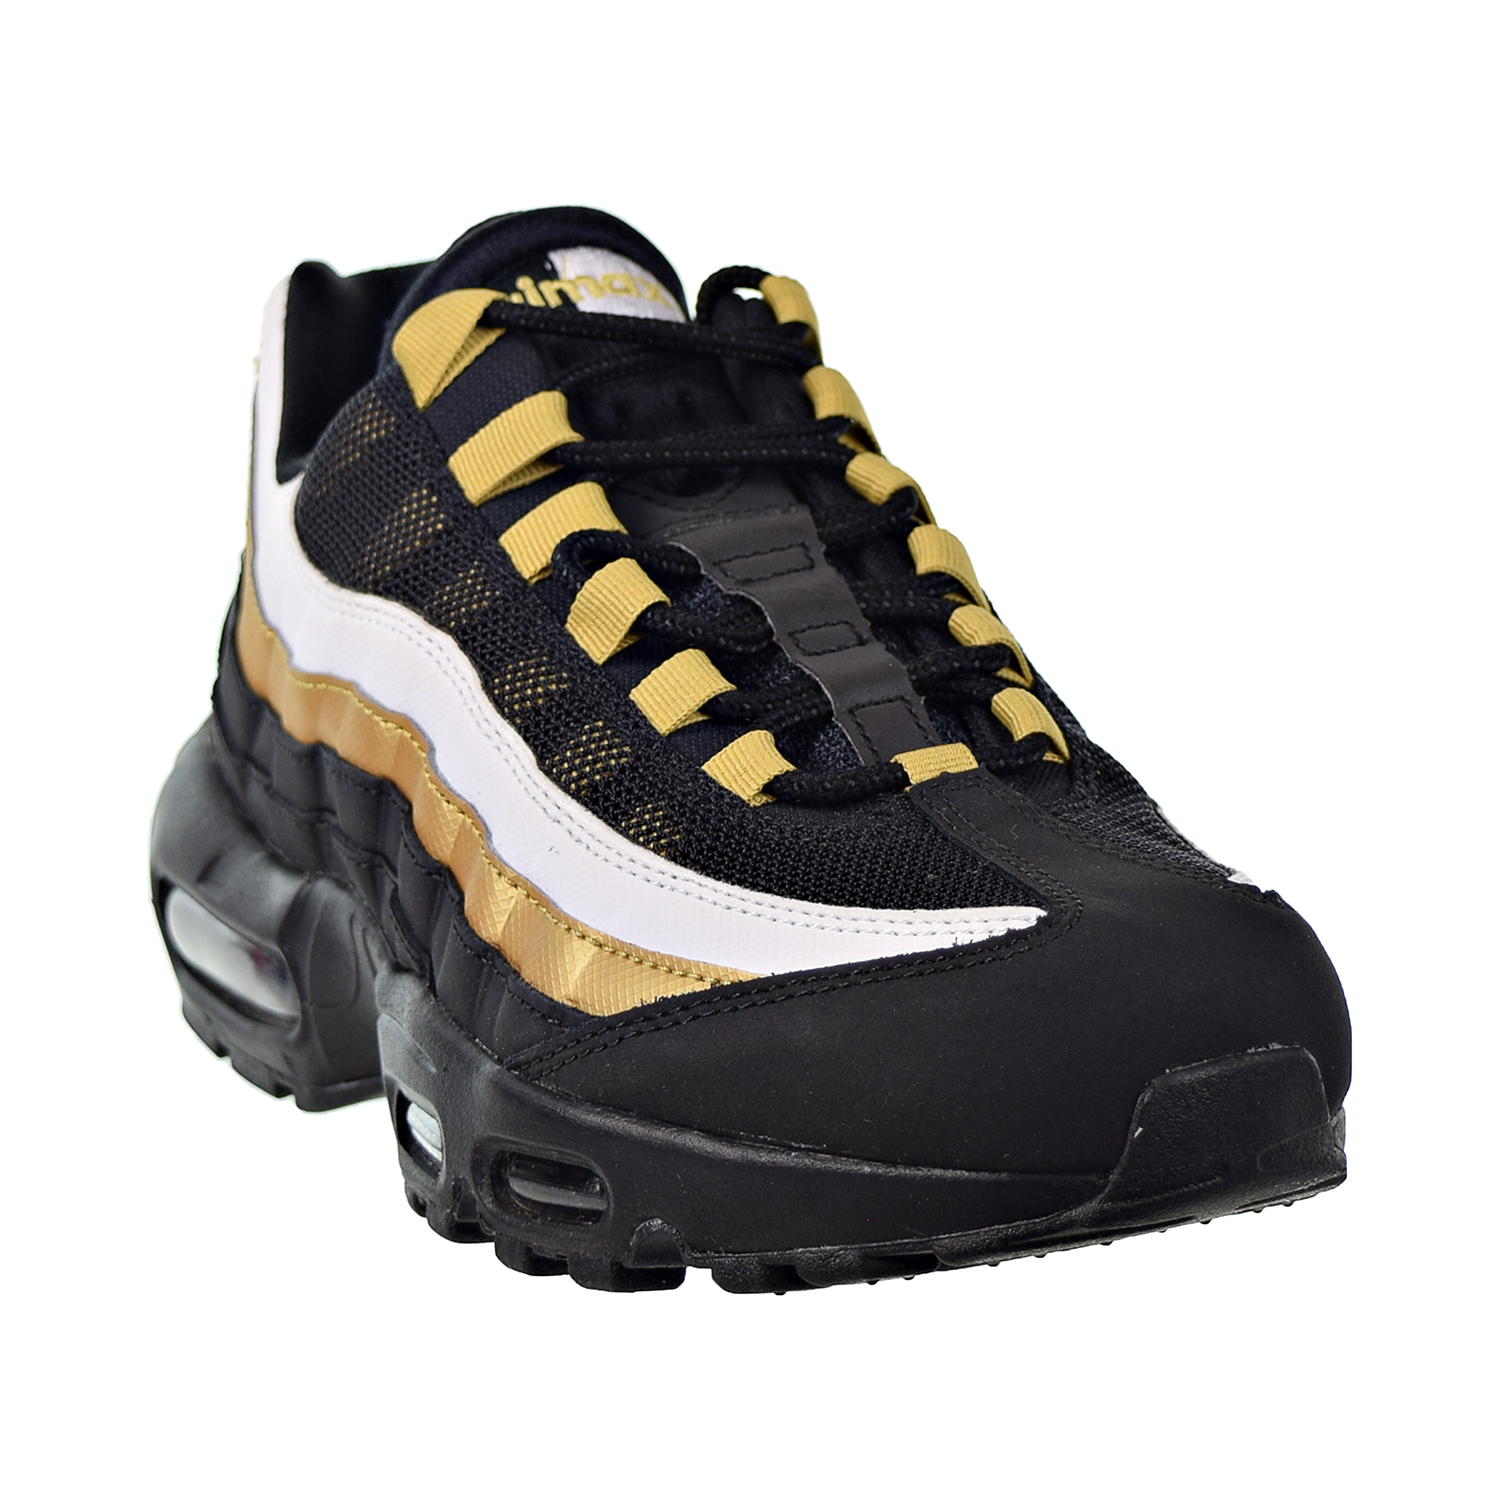 Nike Air Max 95 OG Mens Shoes Black/Metalic Gold at2865-002